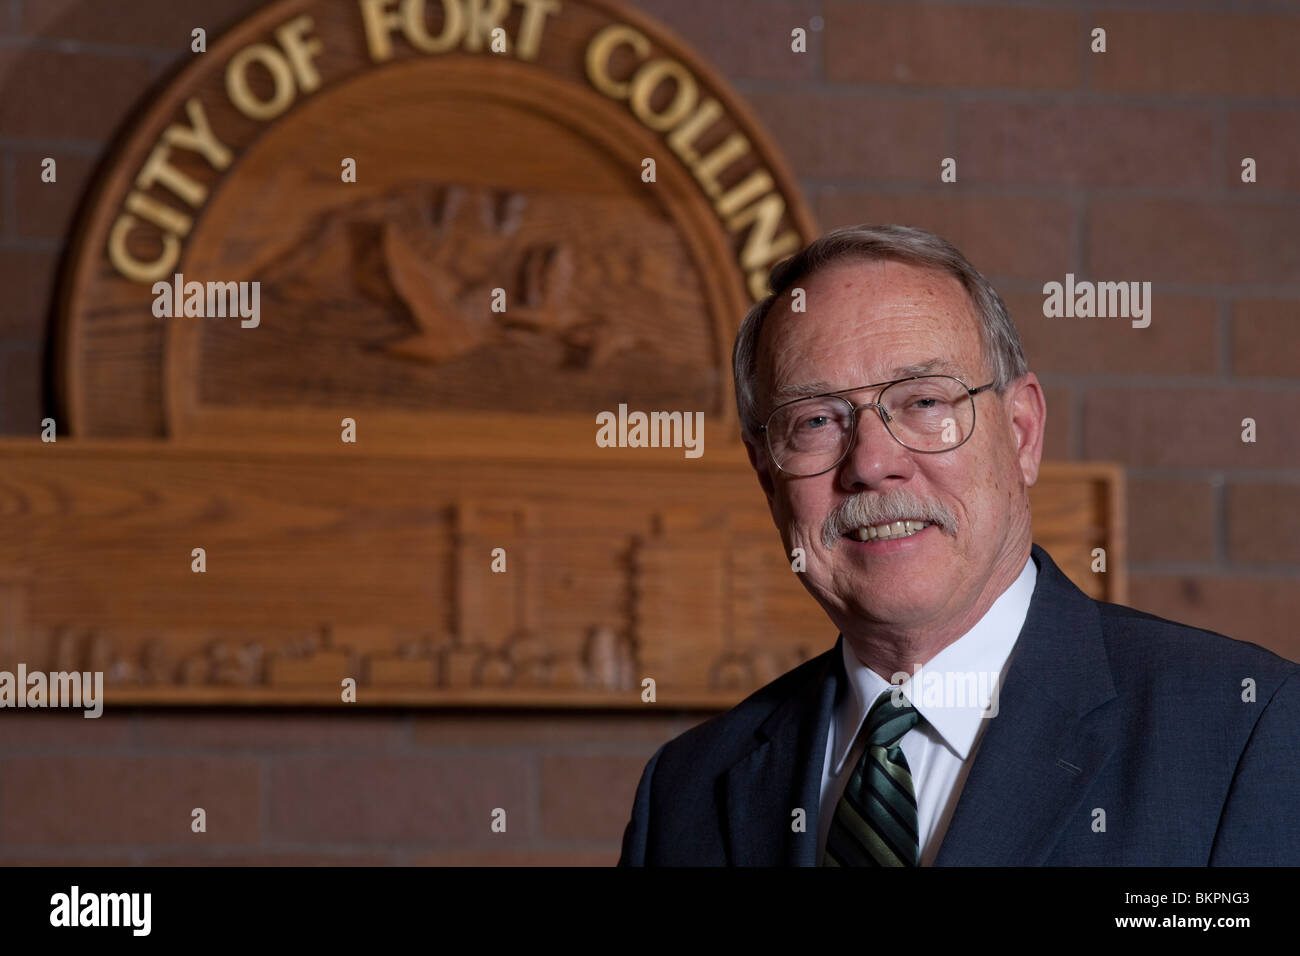 Portrait of City of Fort Collins, Colorado Mayor Doug Huchinson Stock Photo